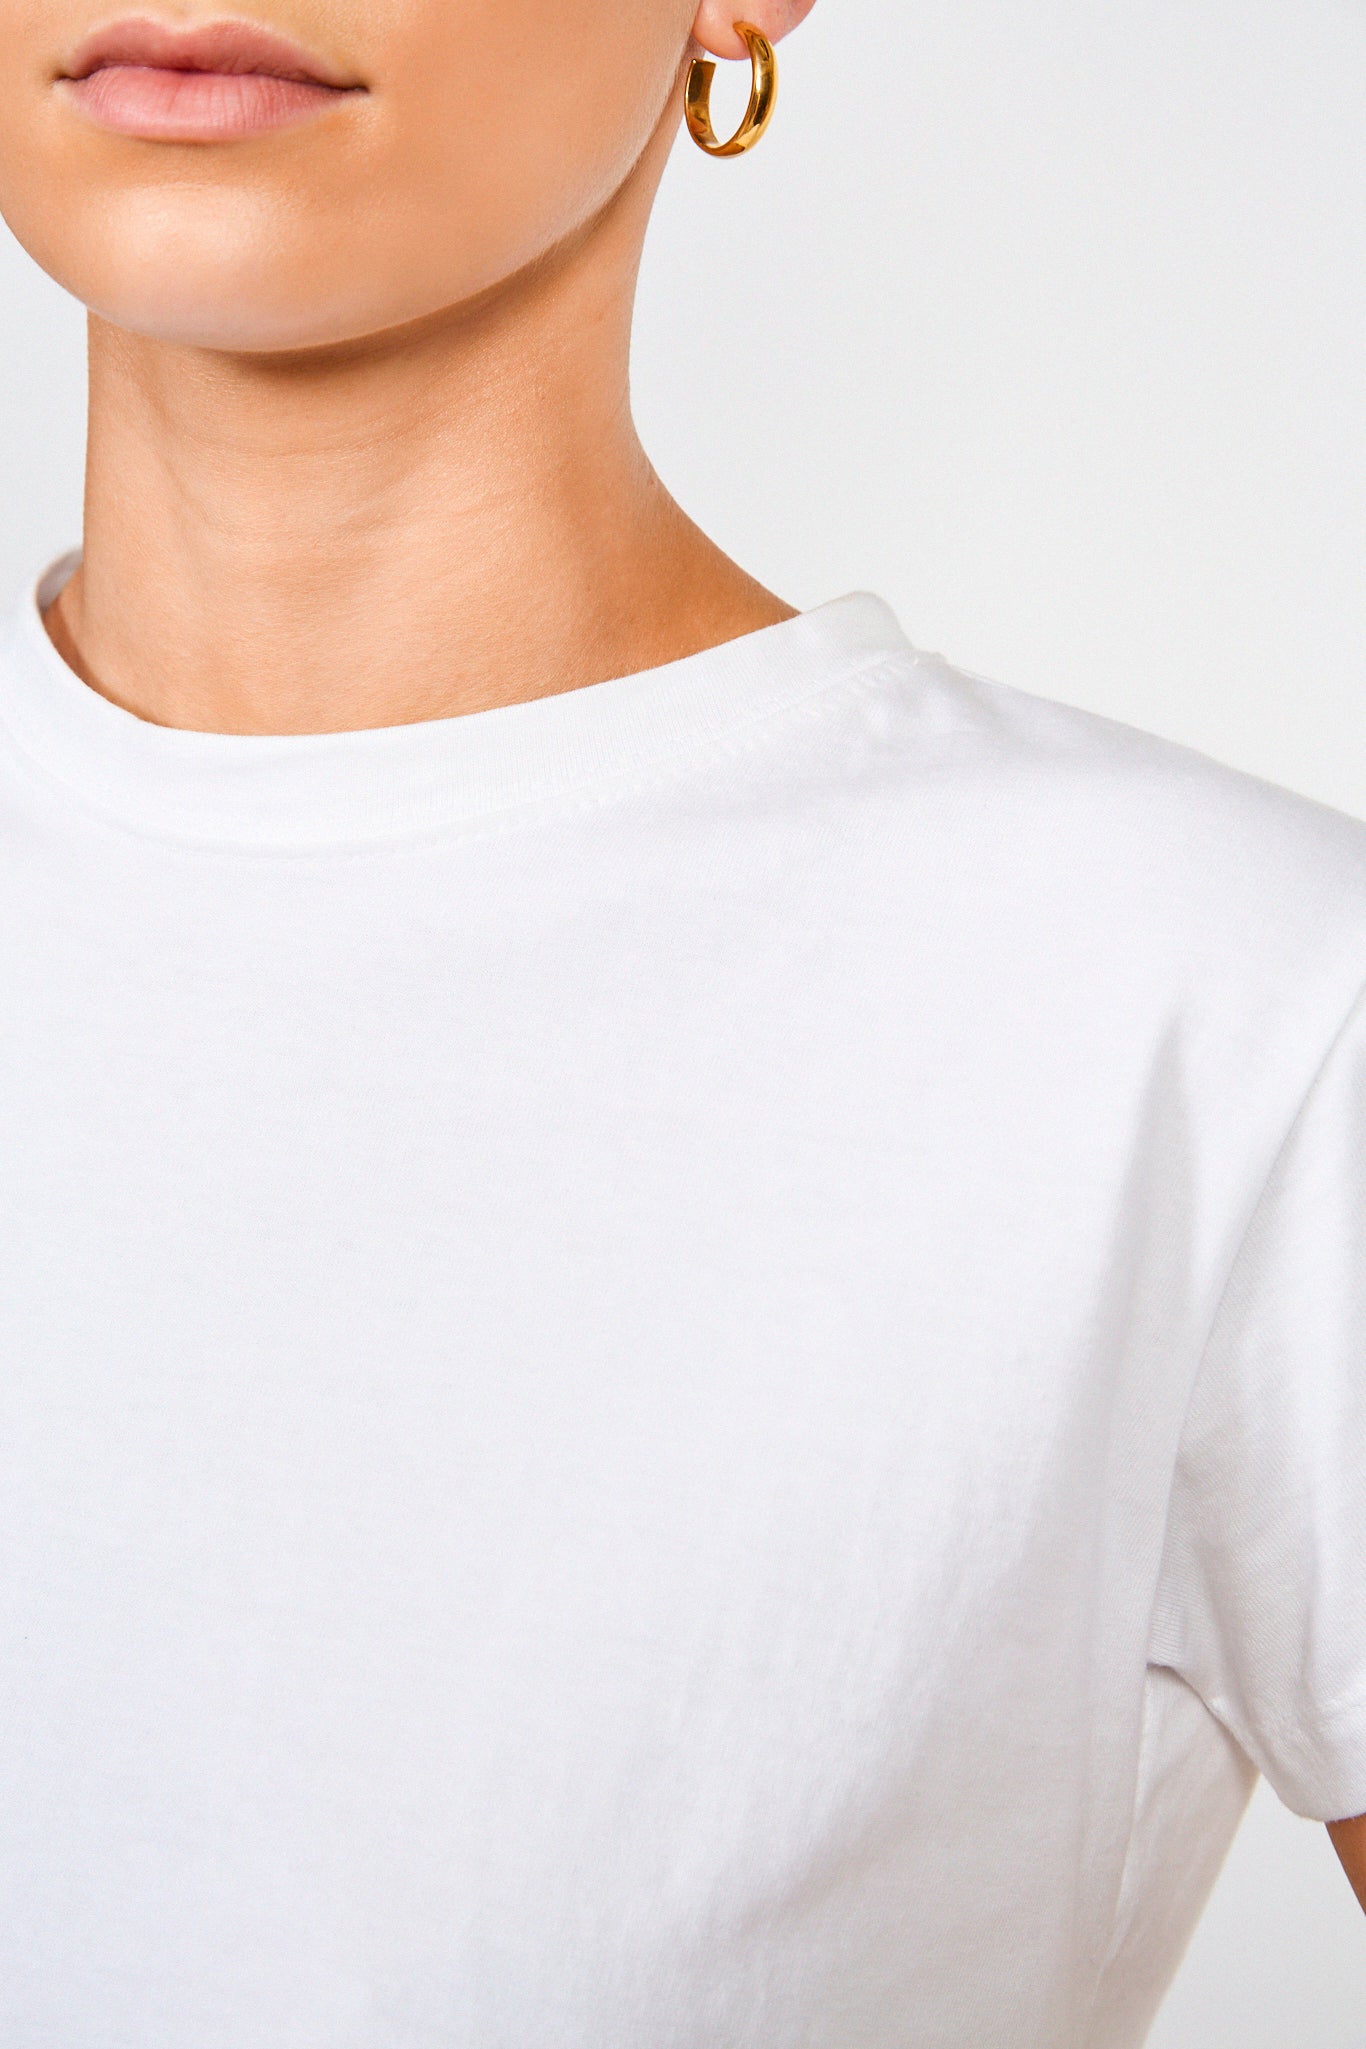 White crew neck t-shirt